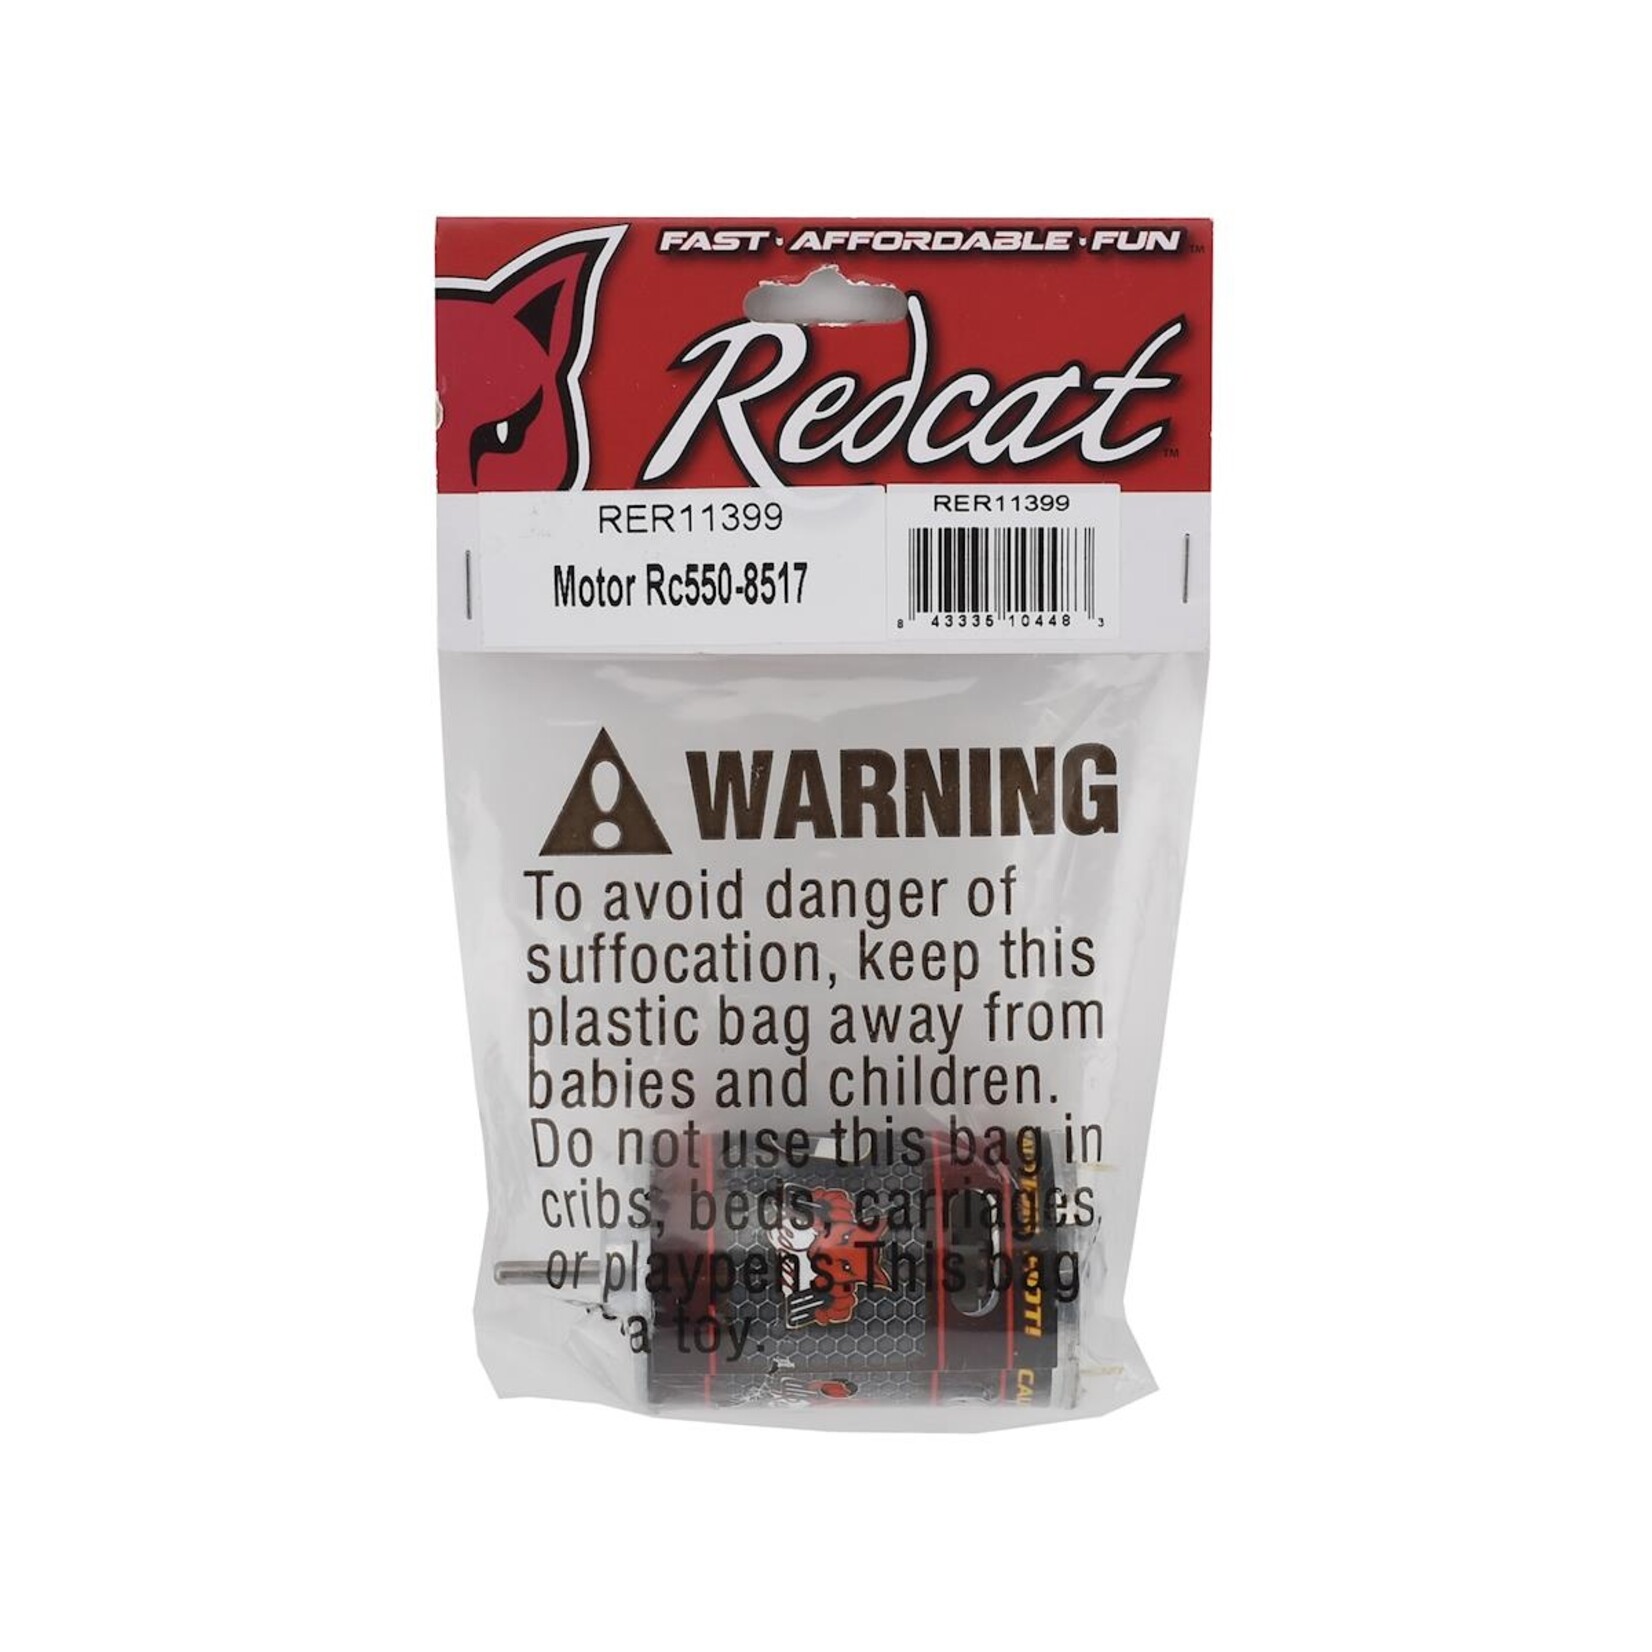 Redcat Racing RedCat Racing RC550-8517 550 Brushed Motor #RER11399